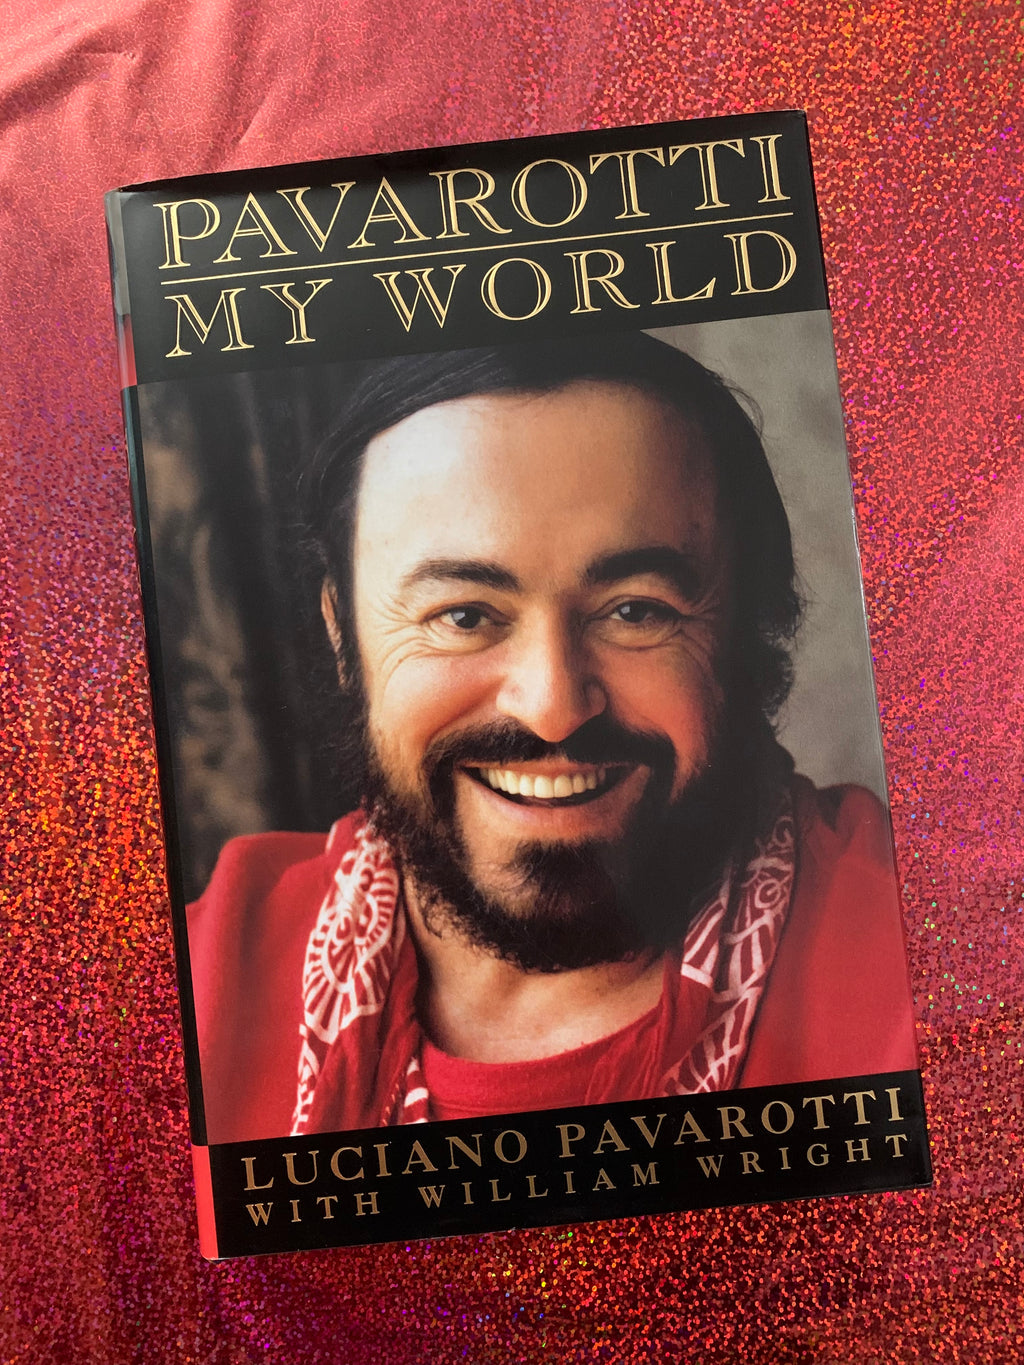 Pavarotti: My World- Luciano Pavarotti with William Wright